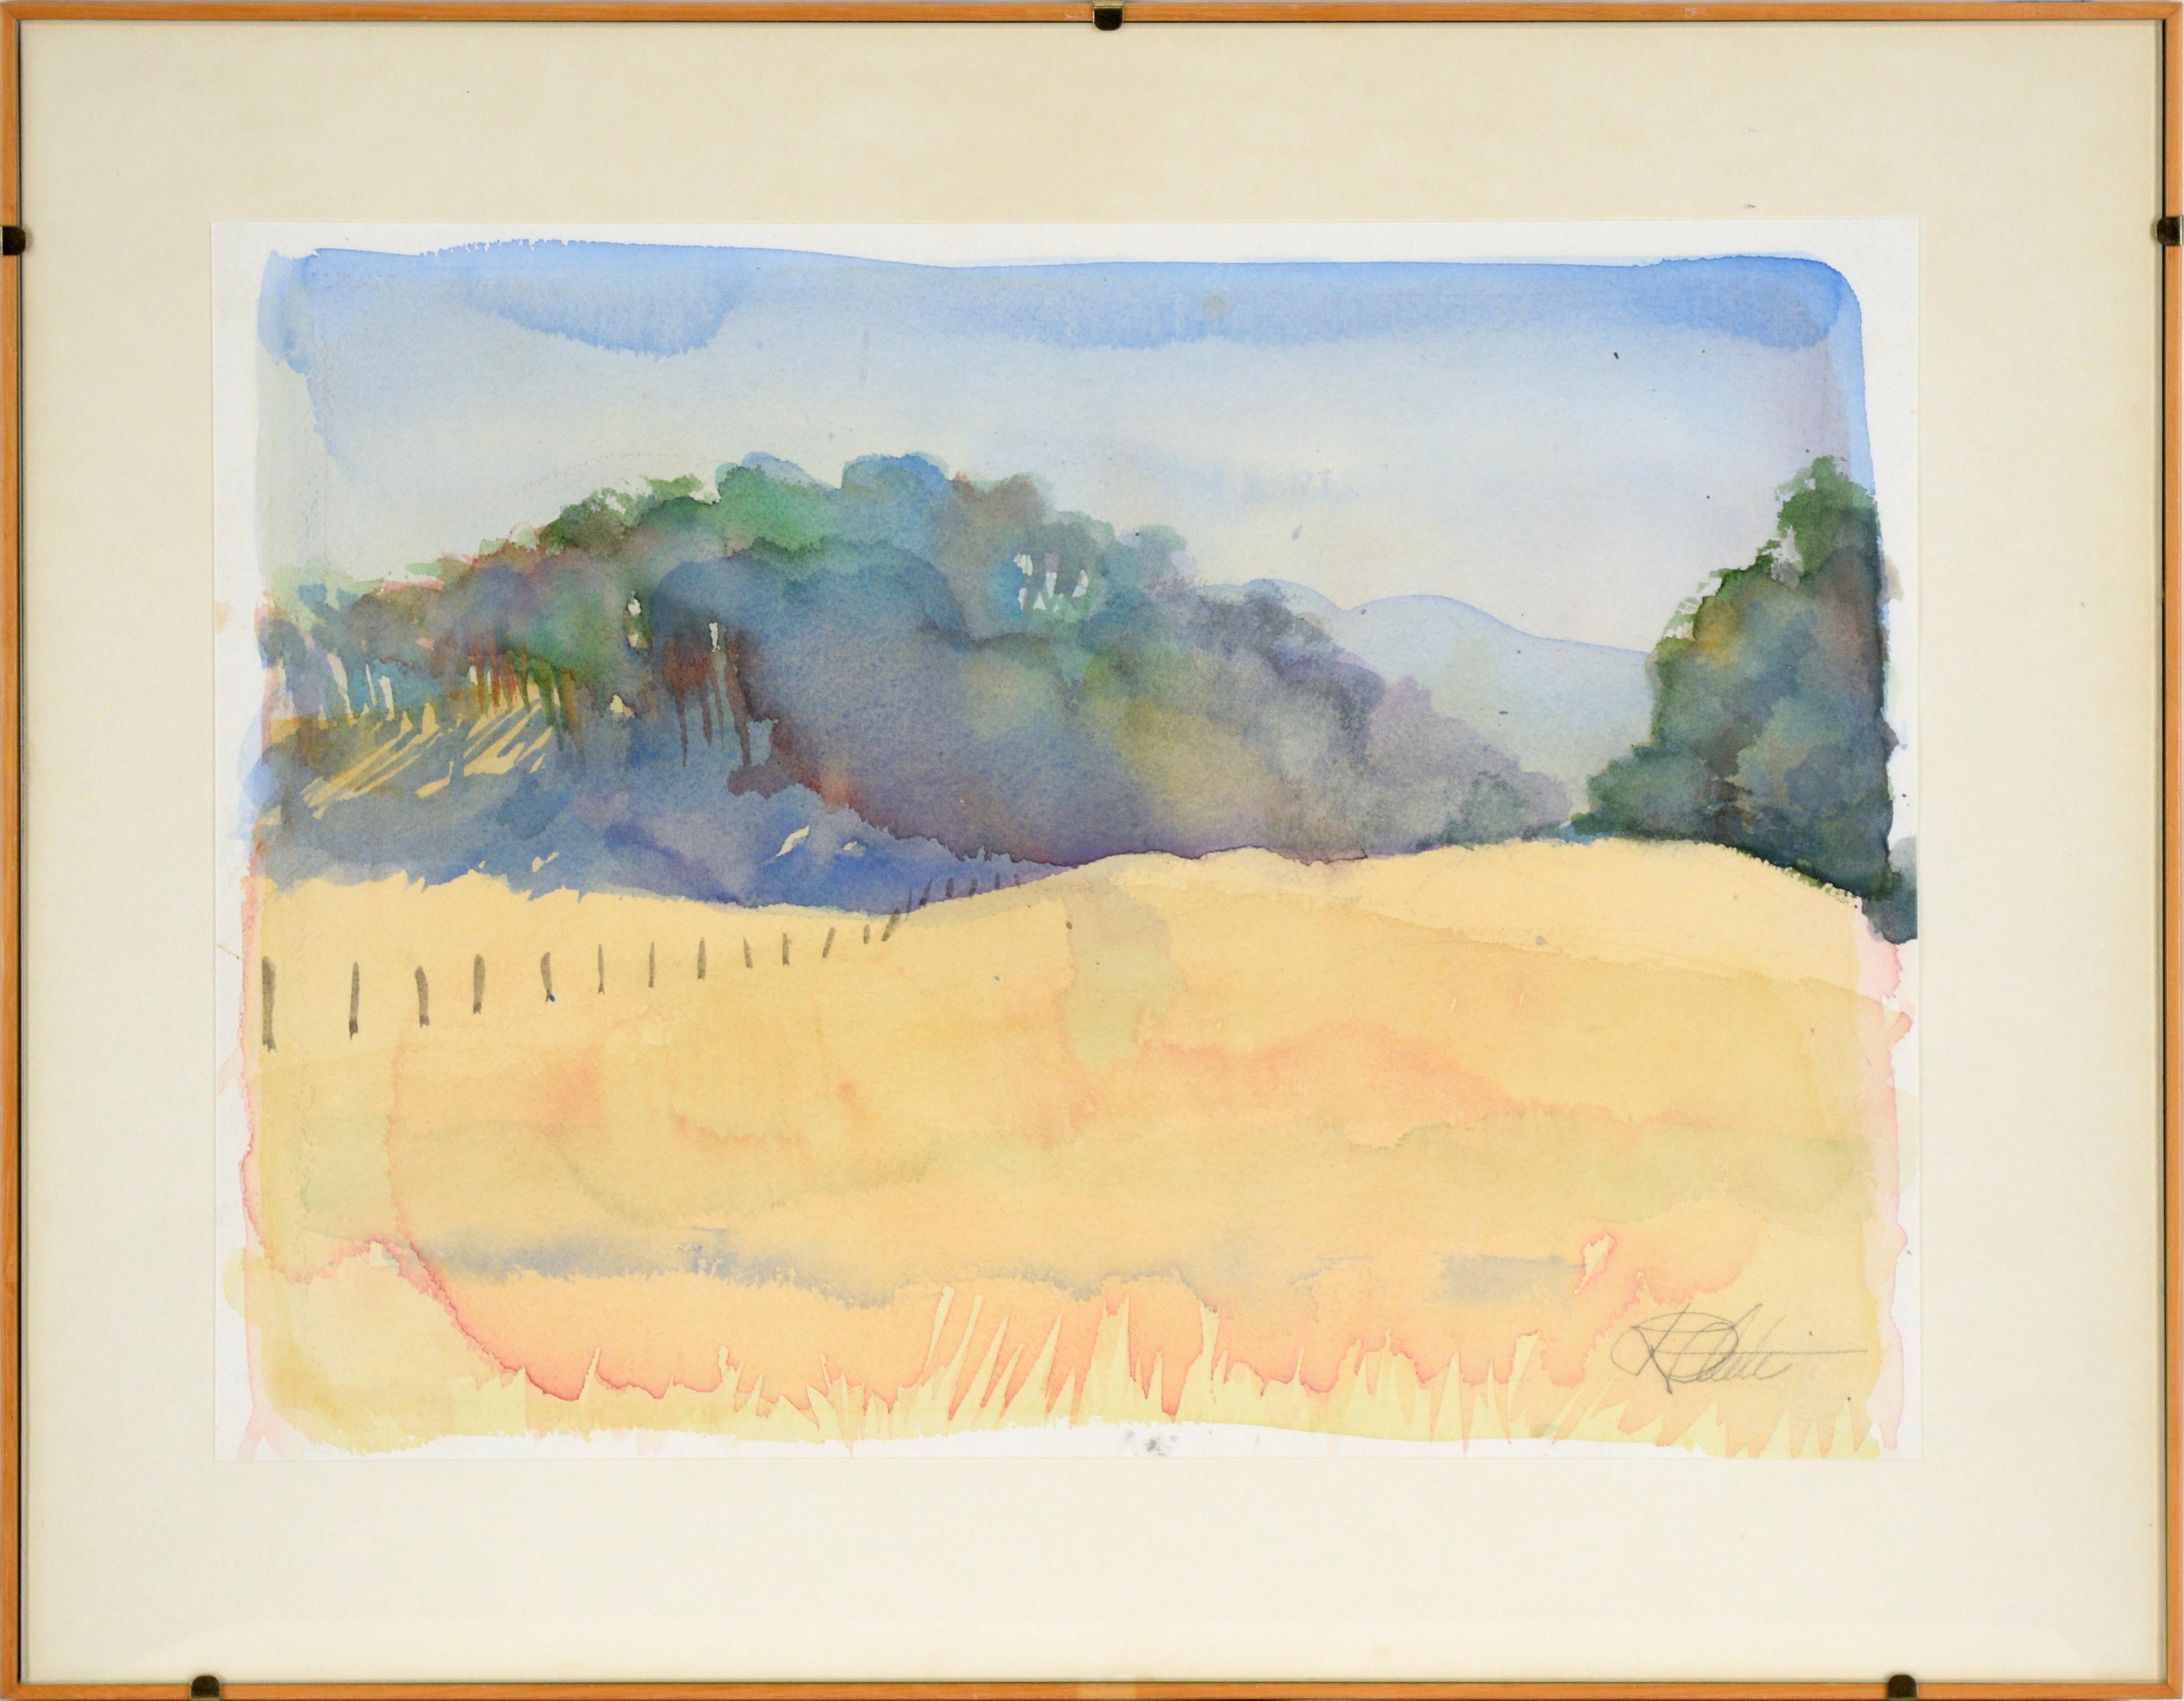 Robert Gantt Steele Landscape Painting - Golden Hills - California Landscape in Watercolor on Paper